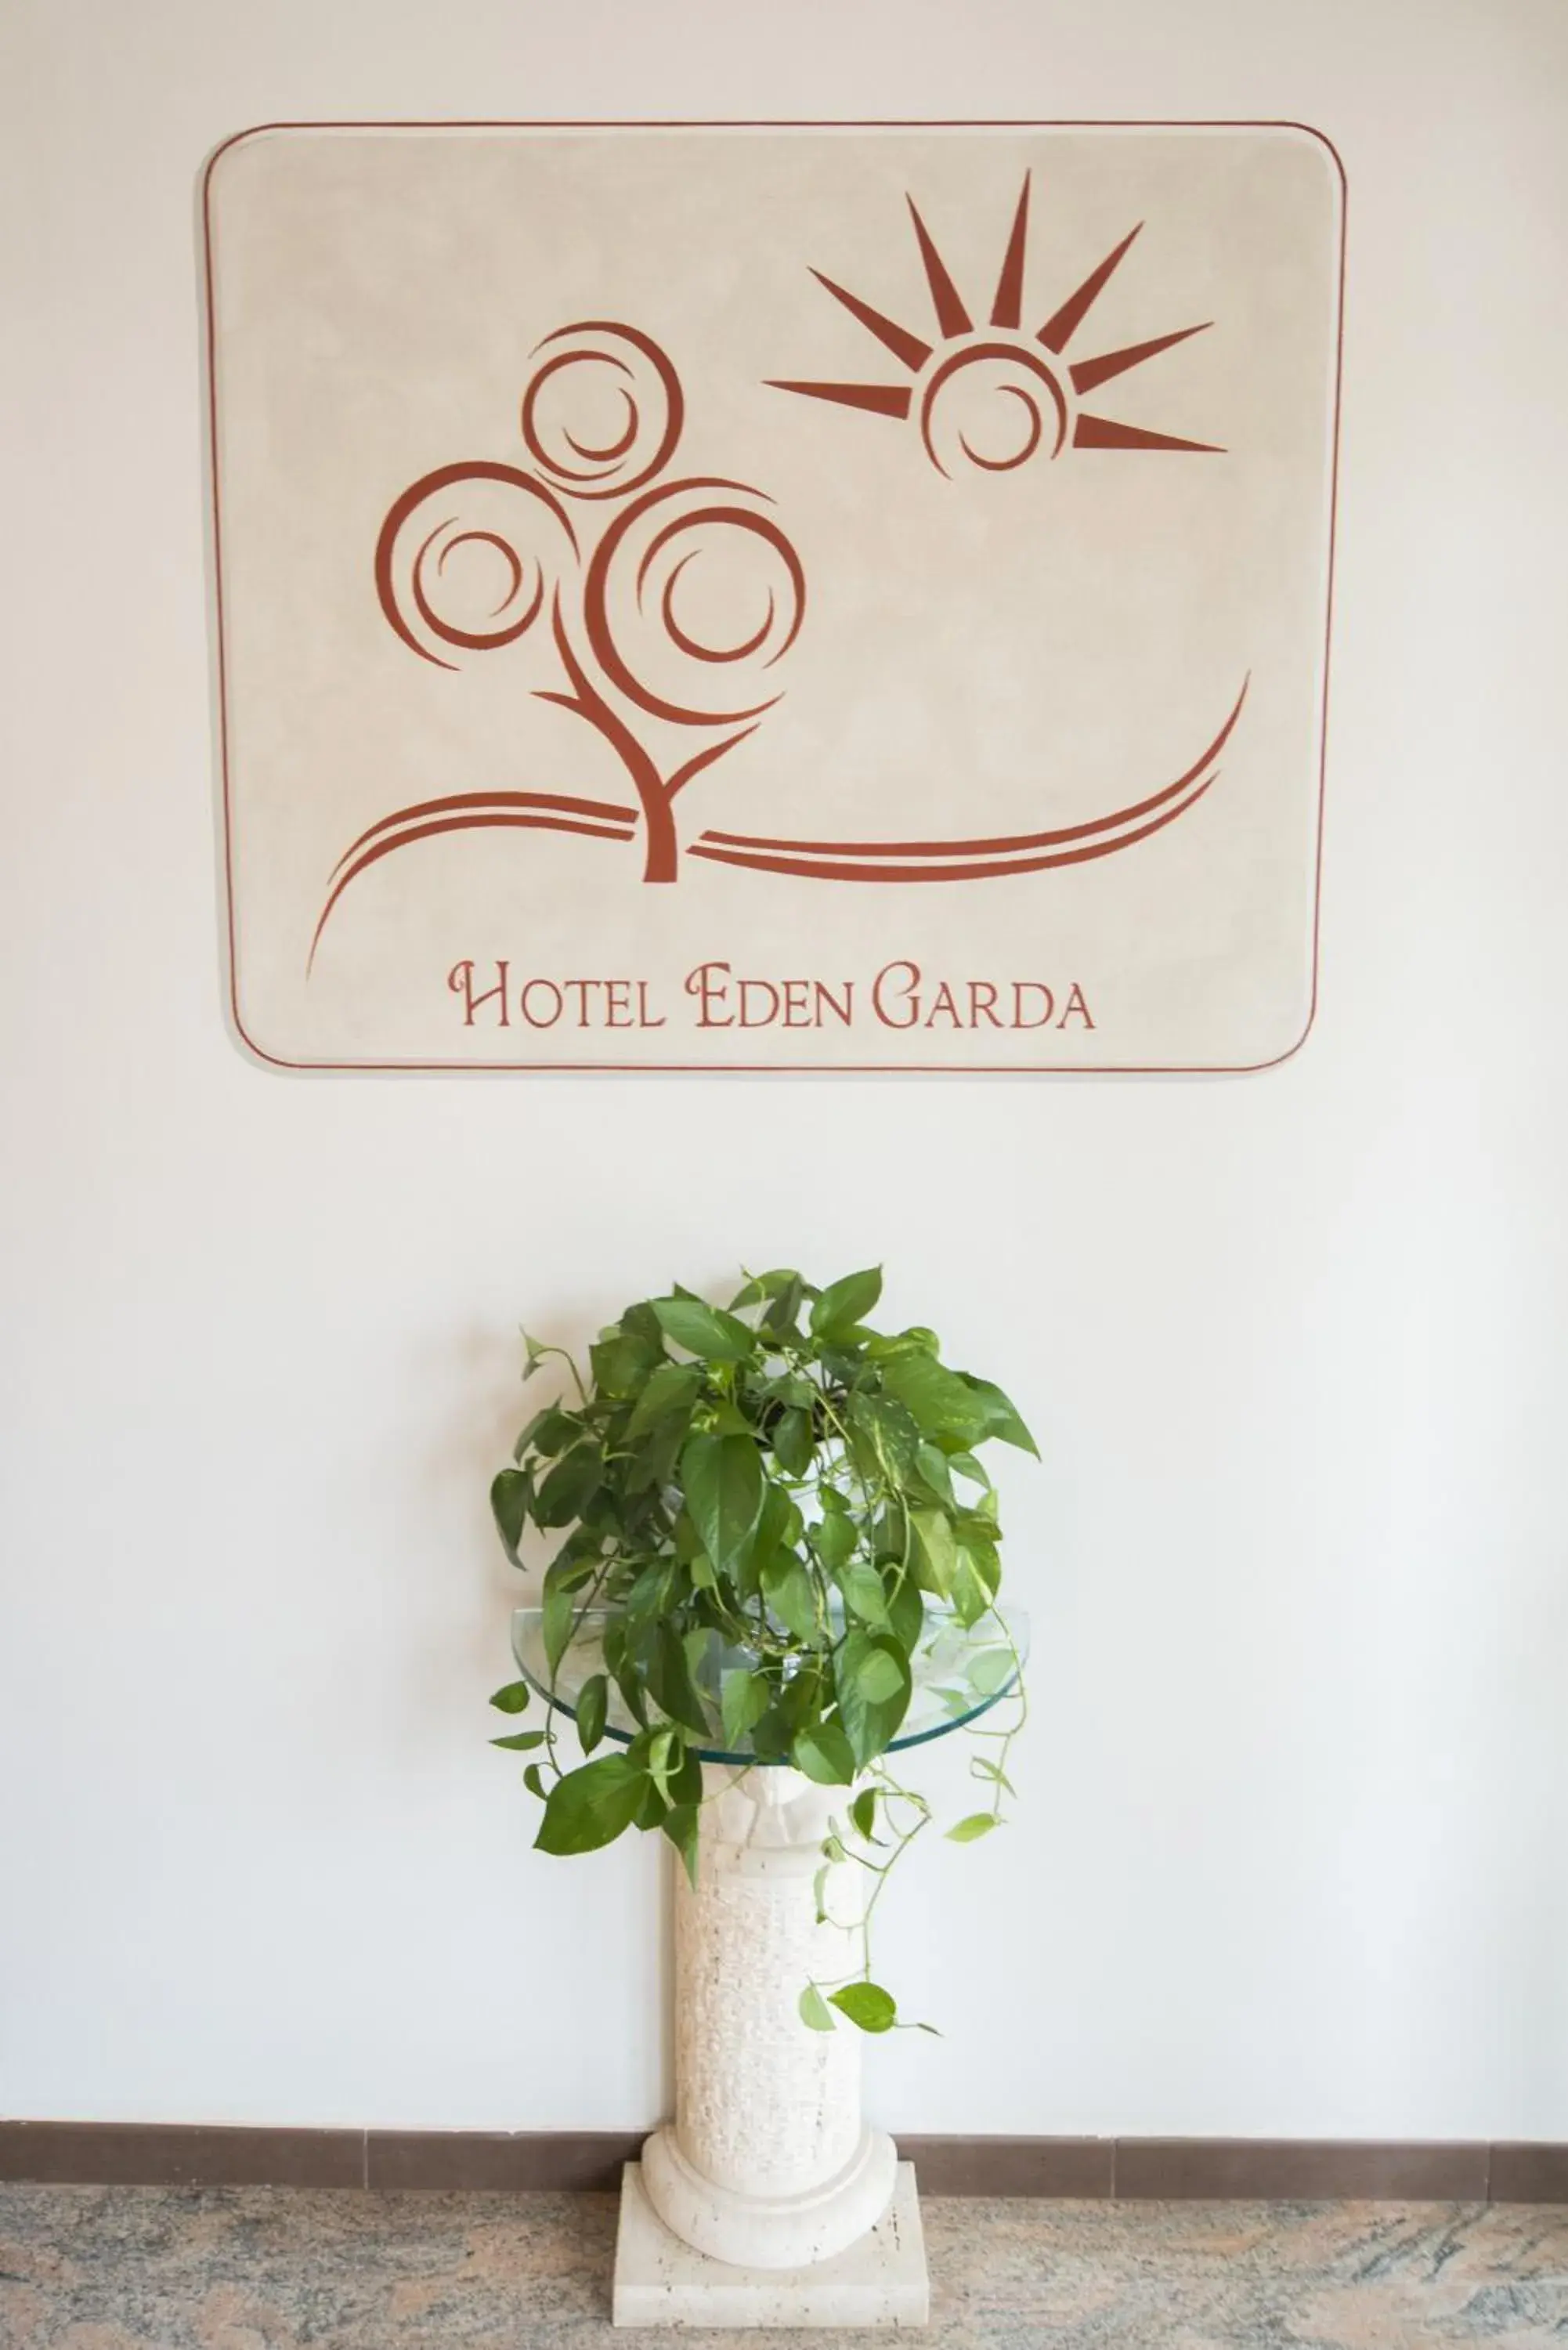 Property logo or sign in Hotel Eden Garda